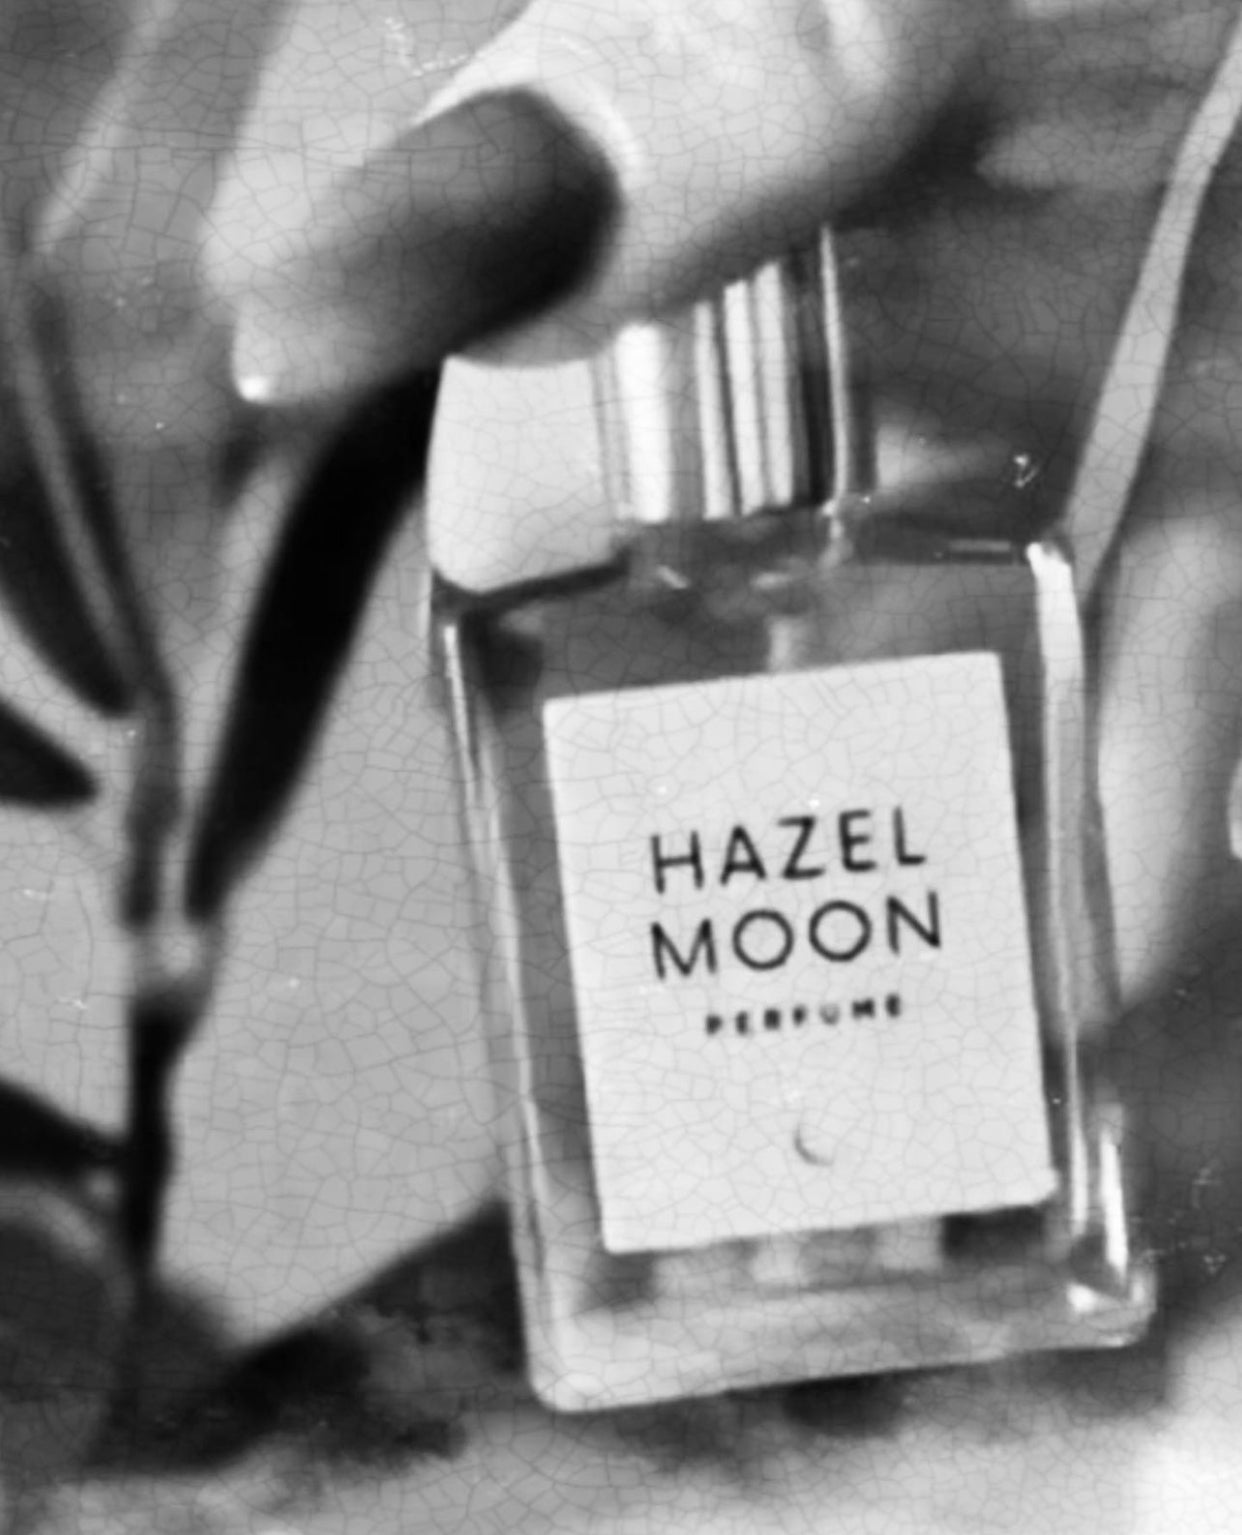 13 Moons - Hazel Moon Perfume